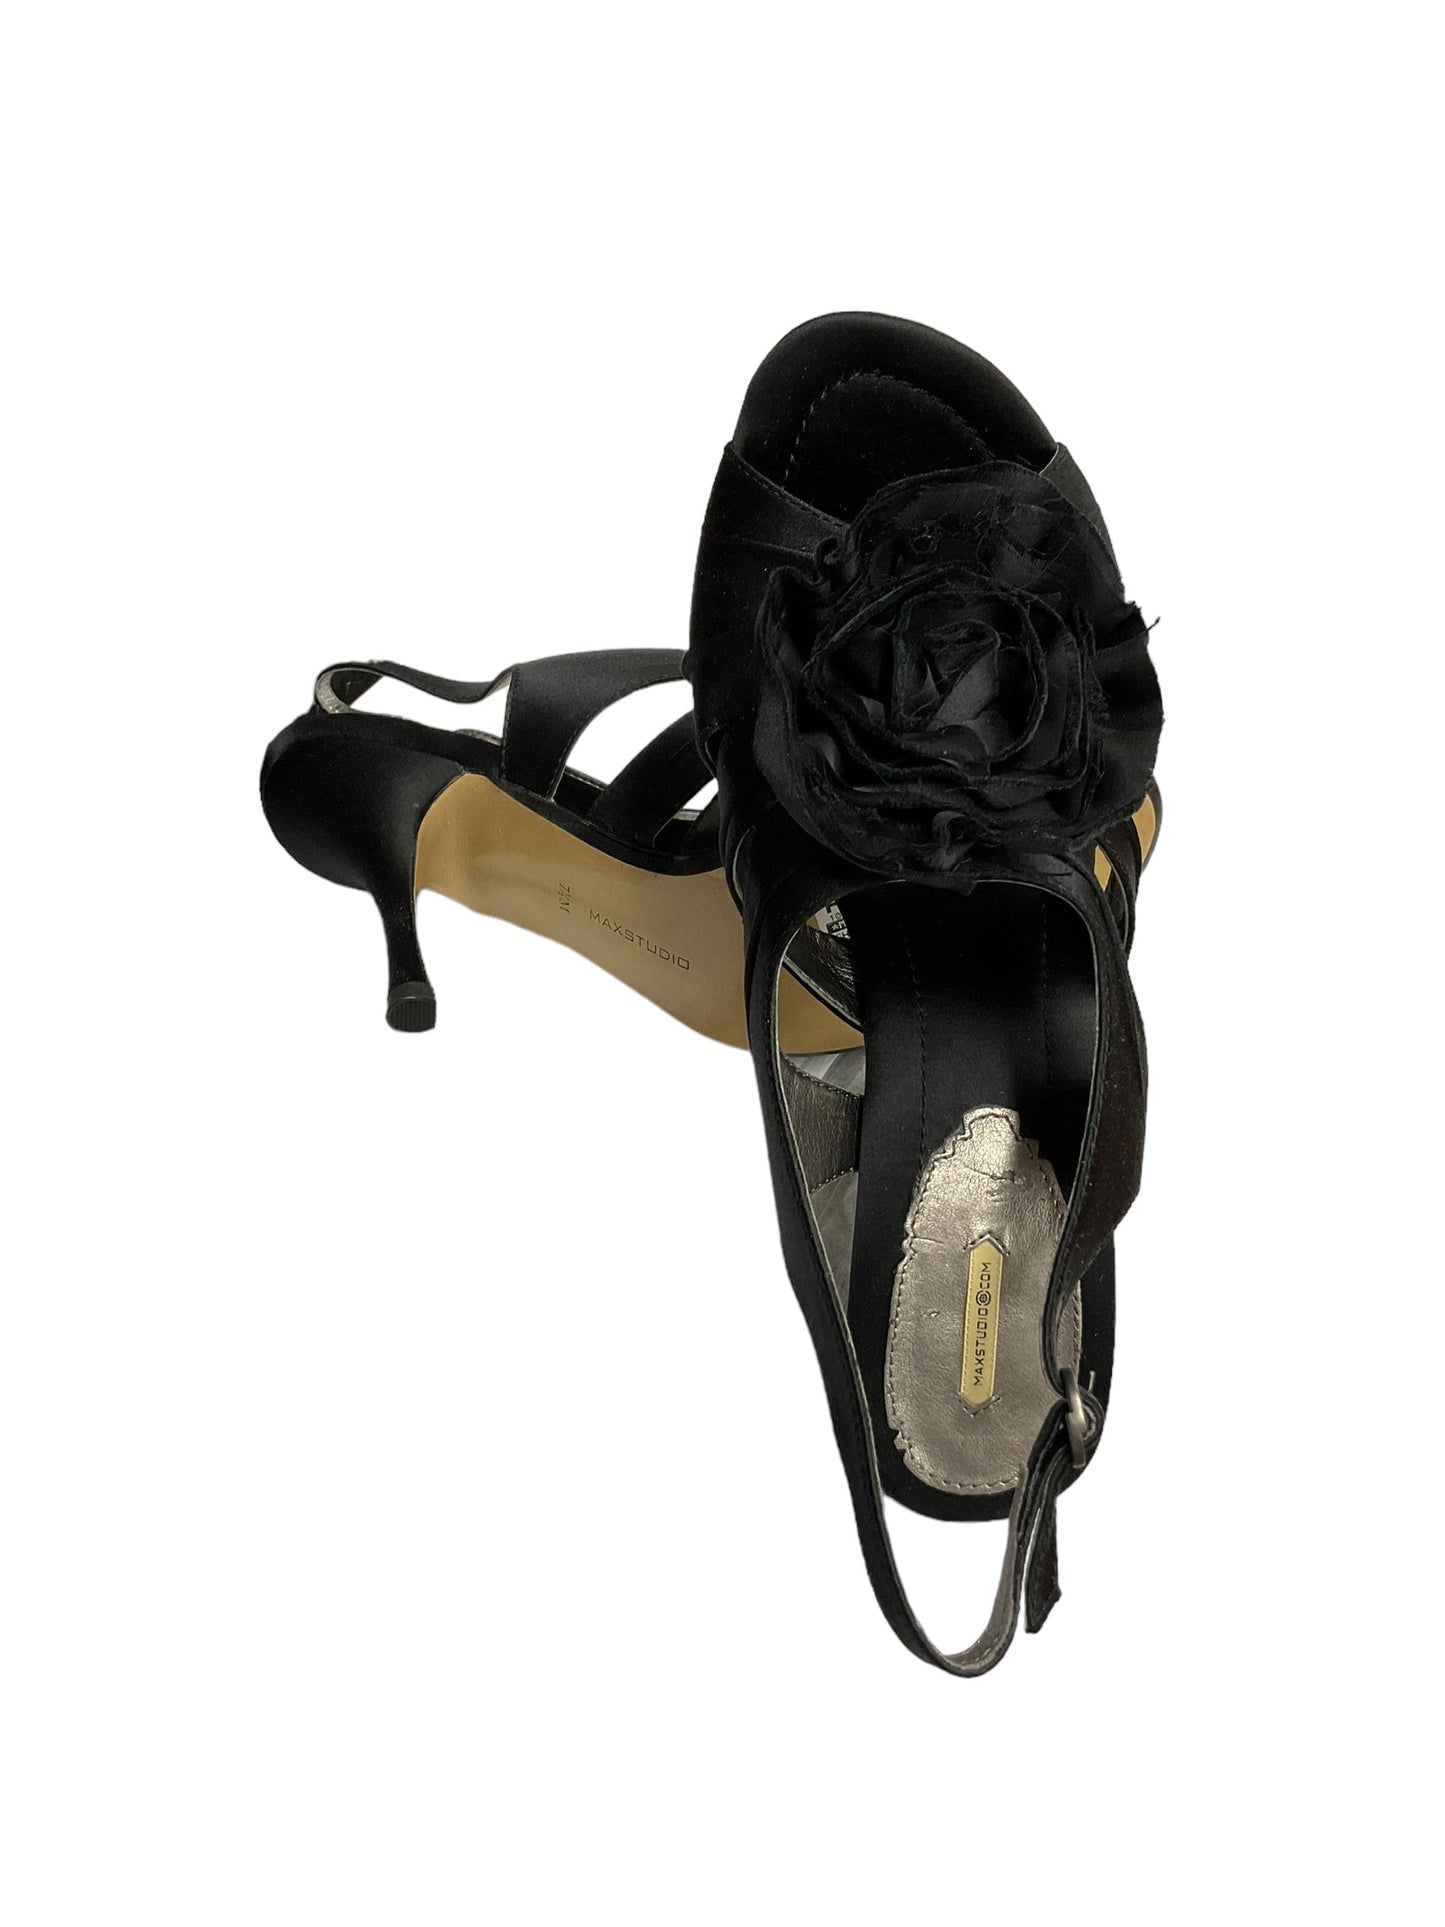 Black Shoes Heels Stiletto Max Studio, Size 7.5